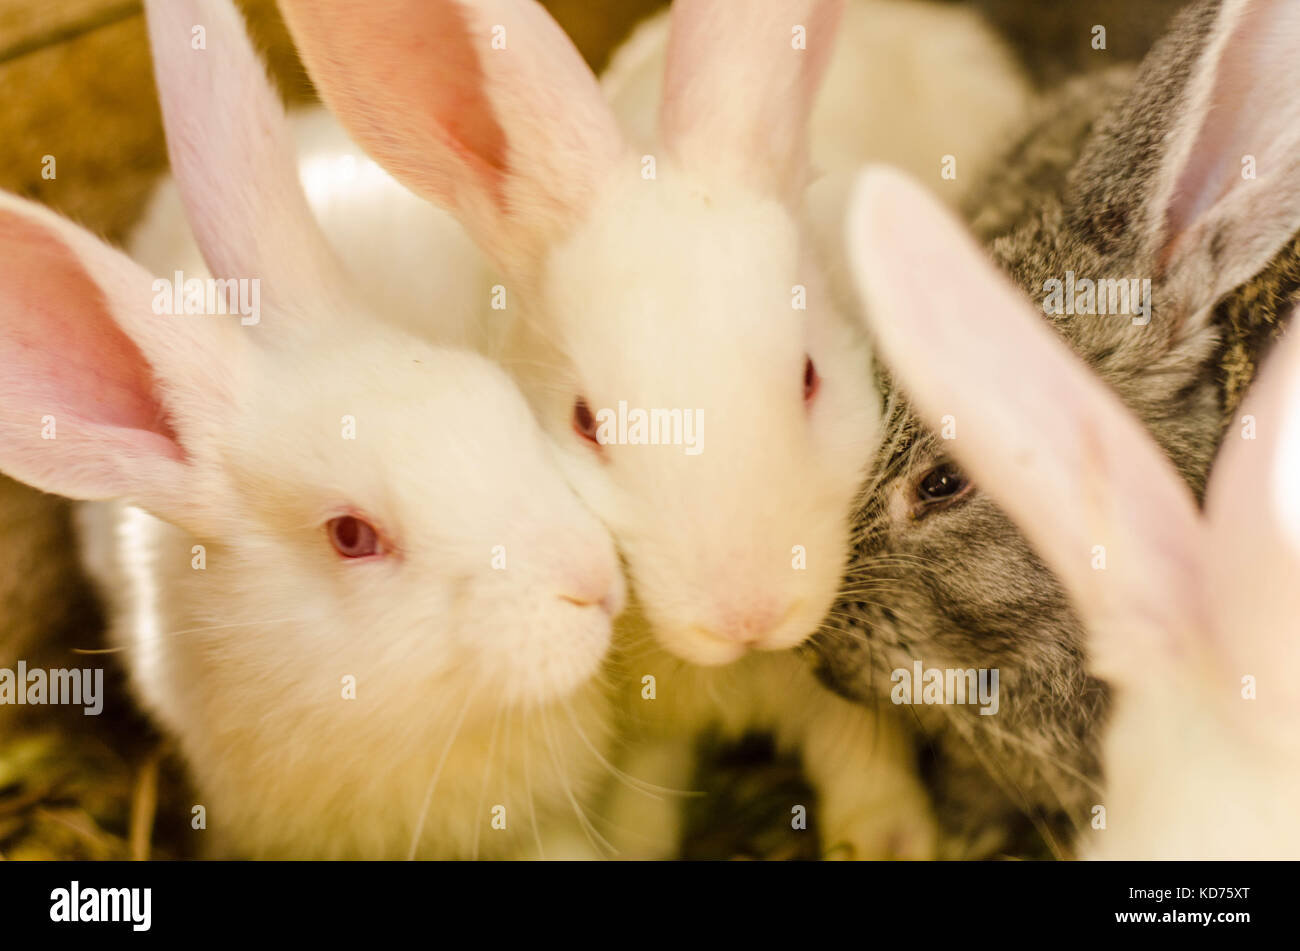 Feeding rabbits on animal farm in rabbit-hutch. Stock Photo